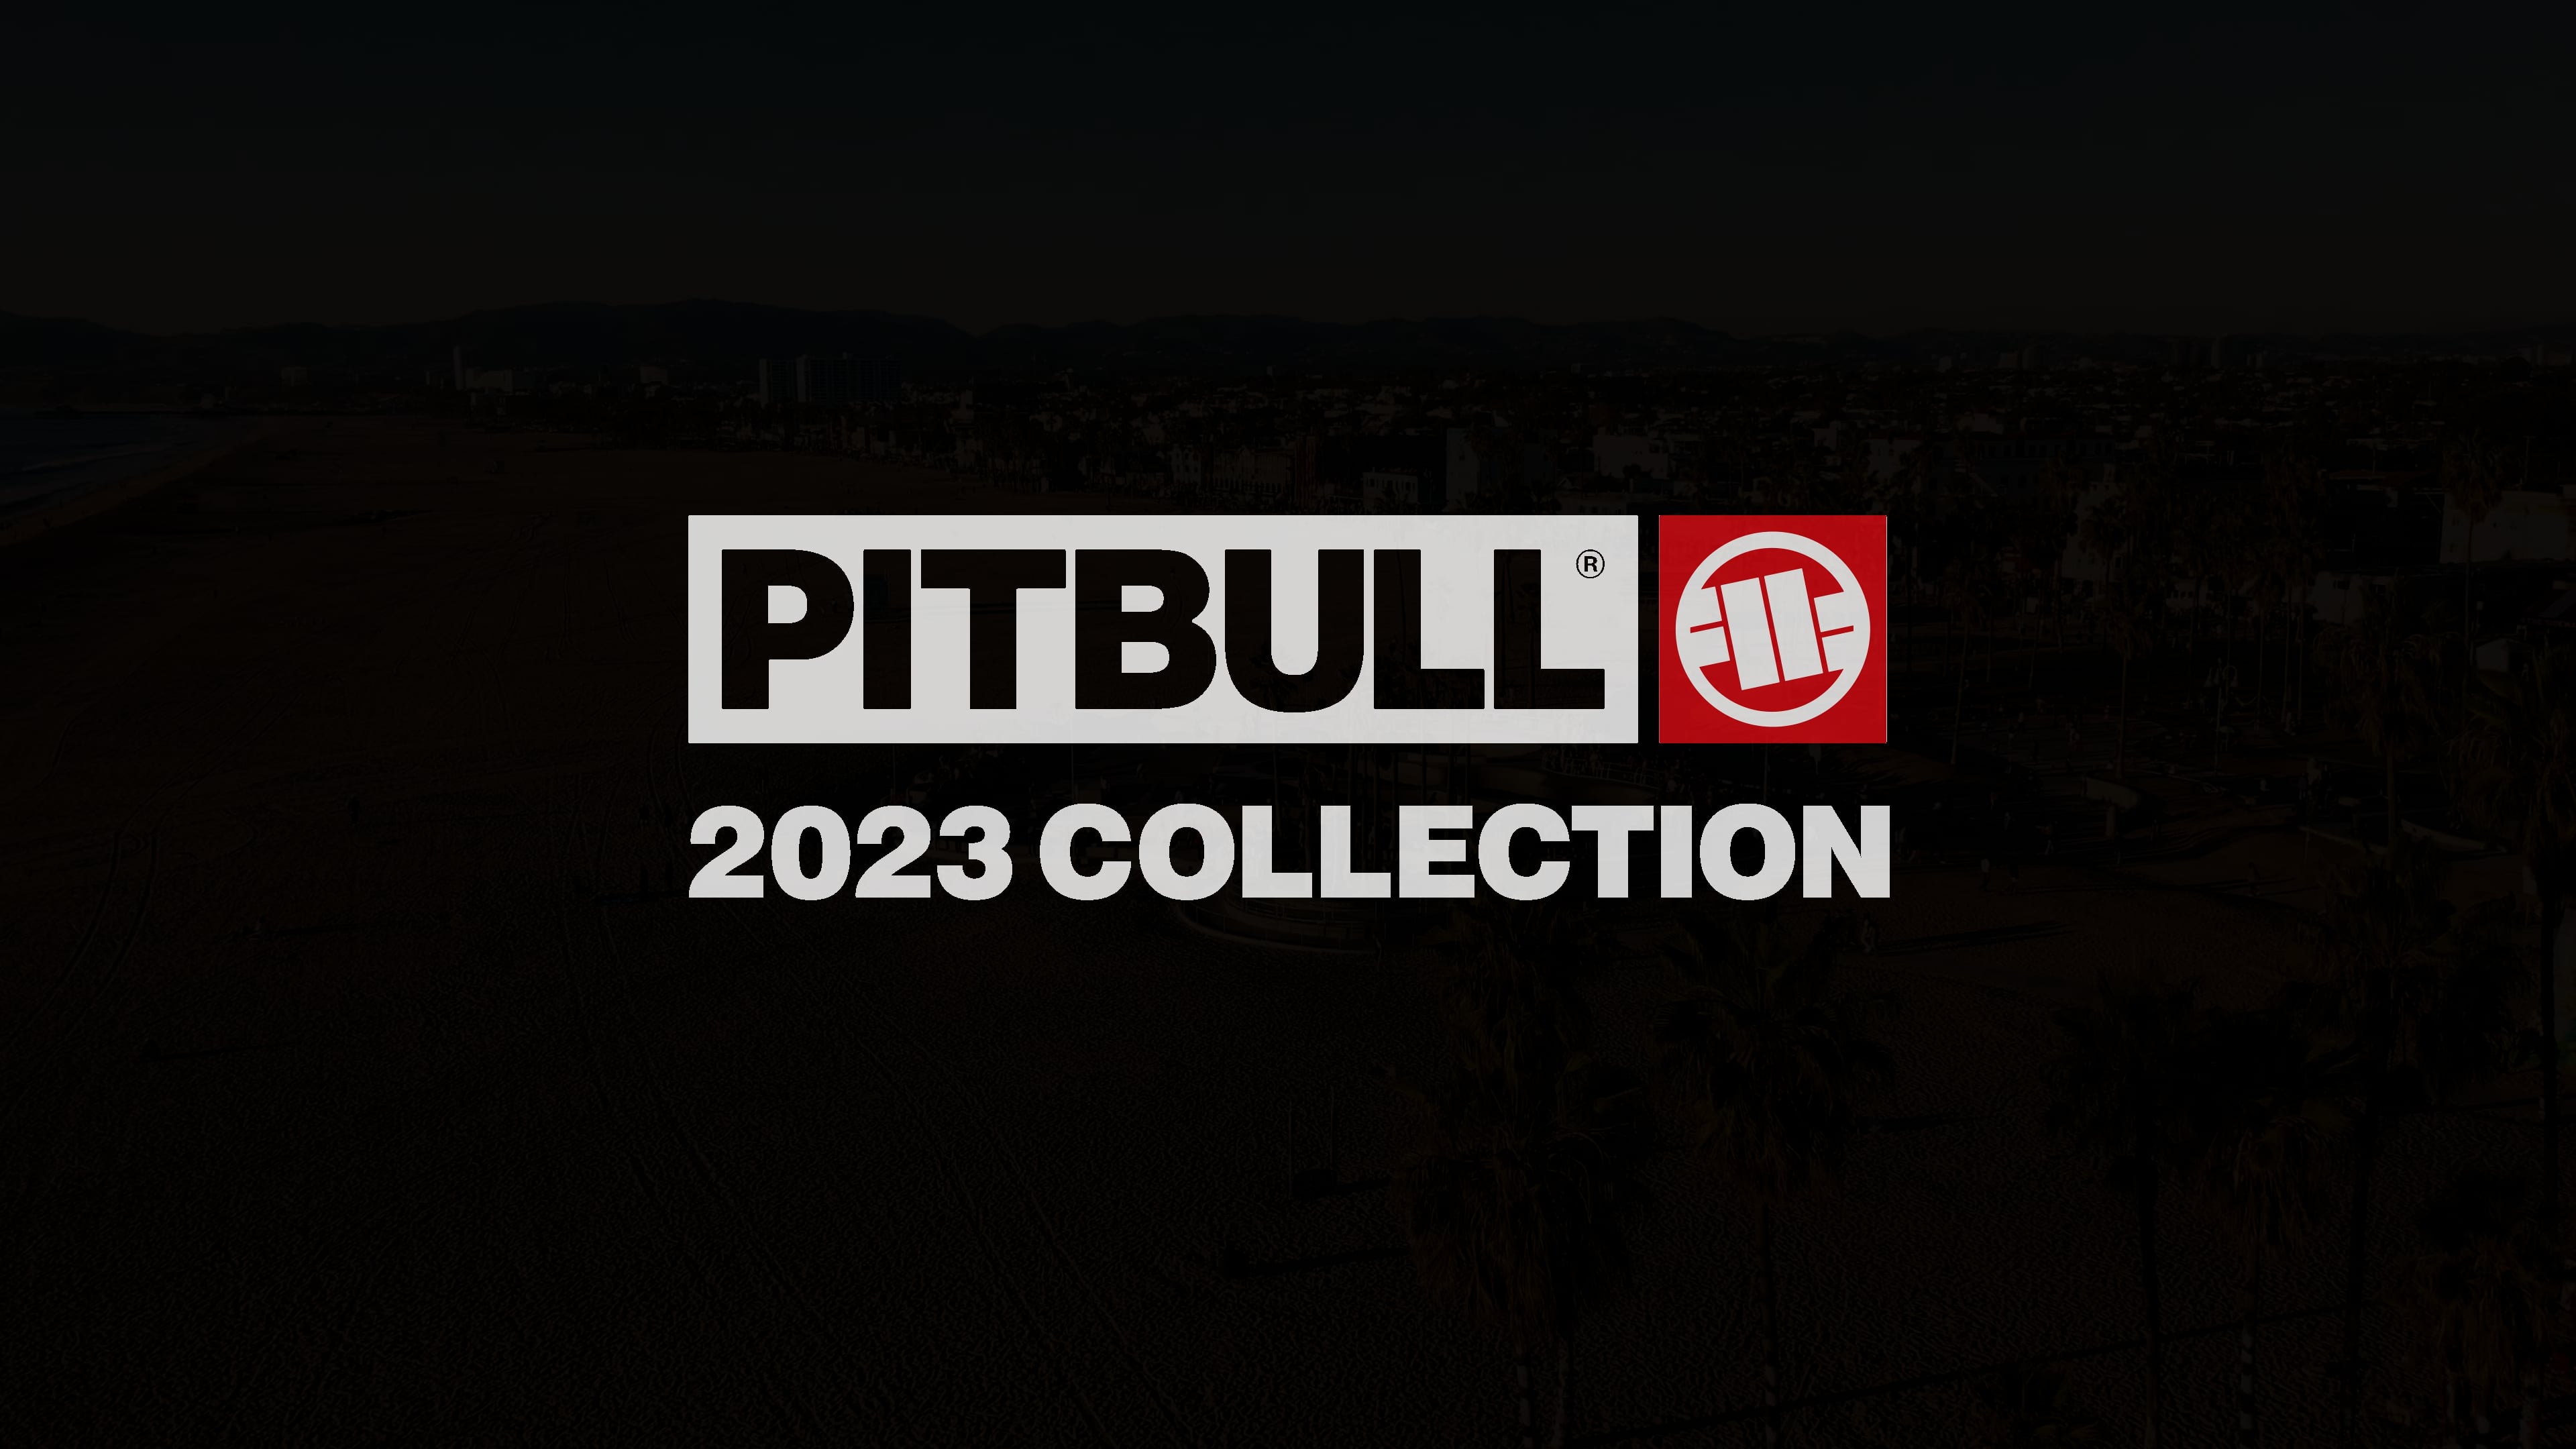 Herren-T-Shirt Pitbull West Coast T-S Hilltop 170 mint